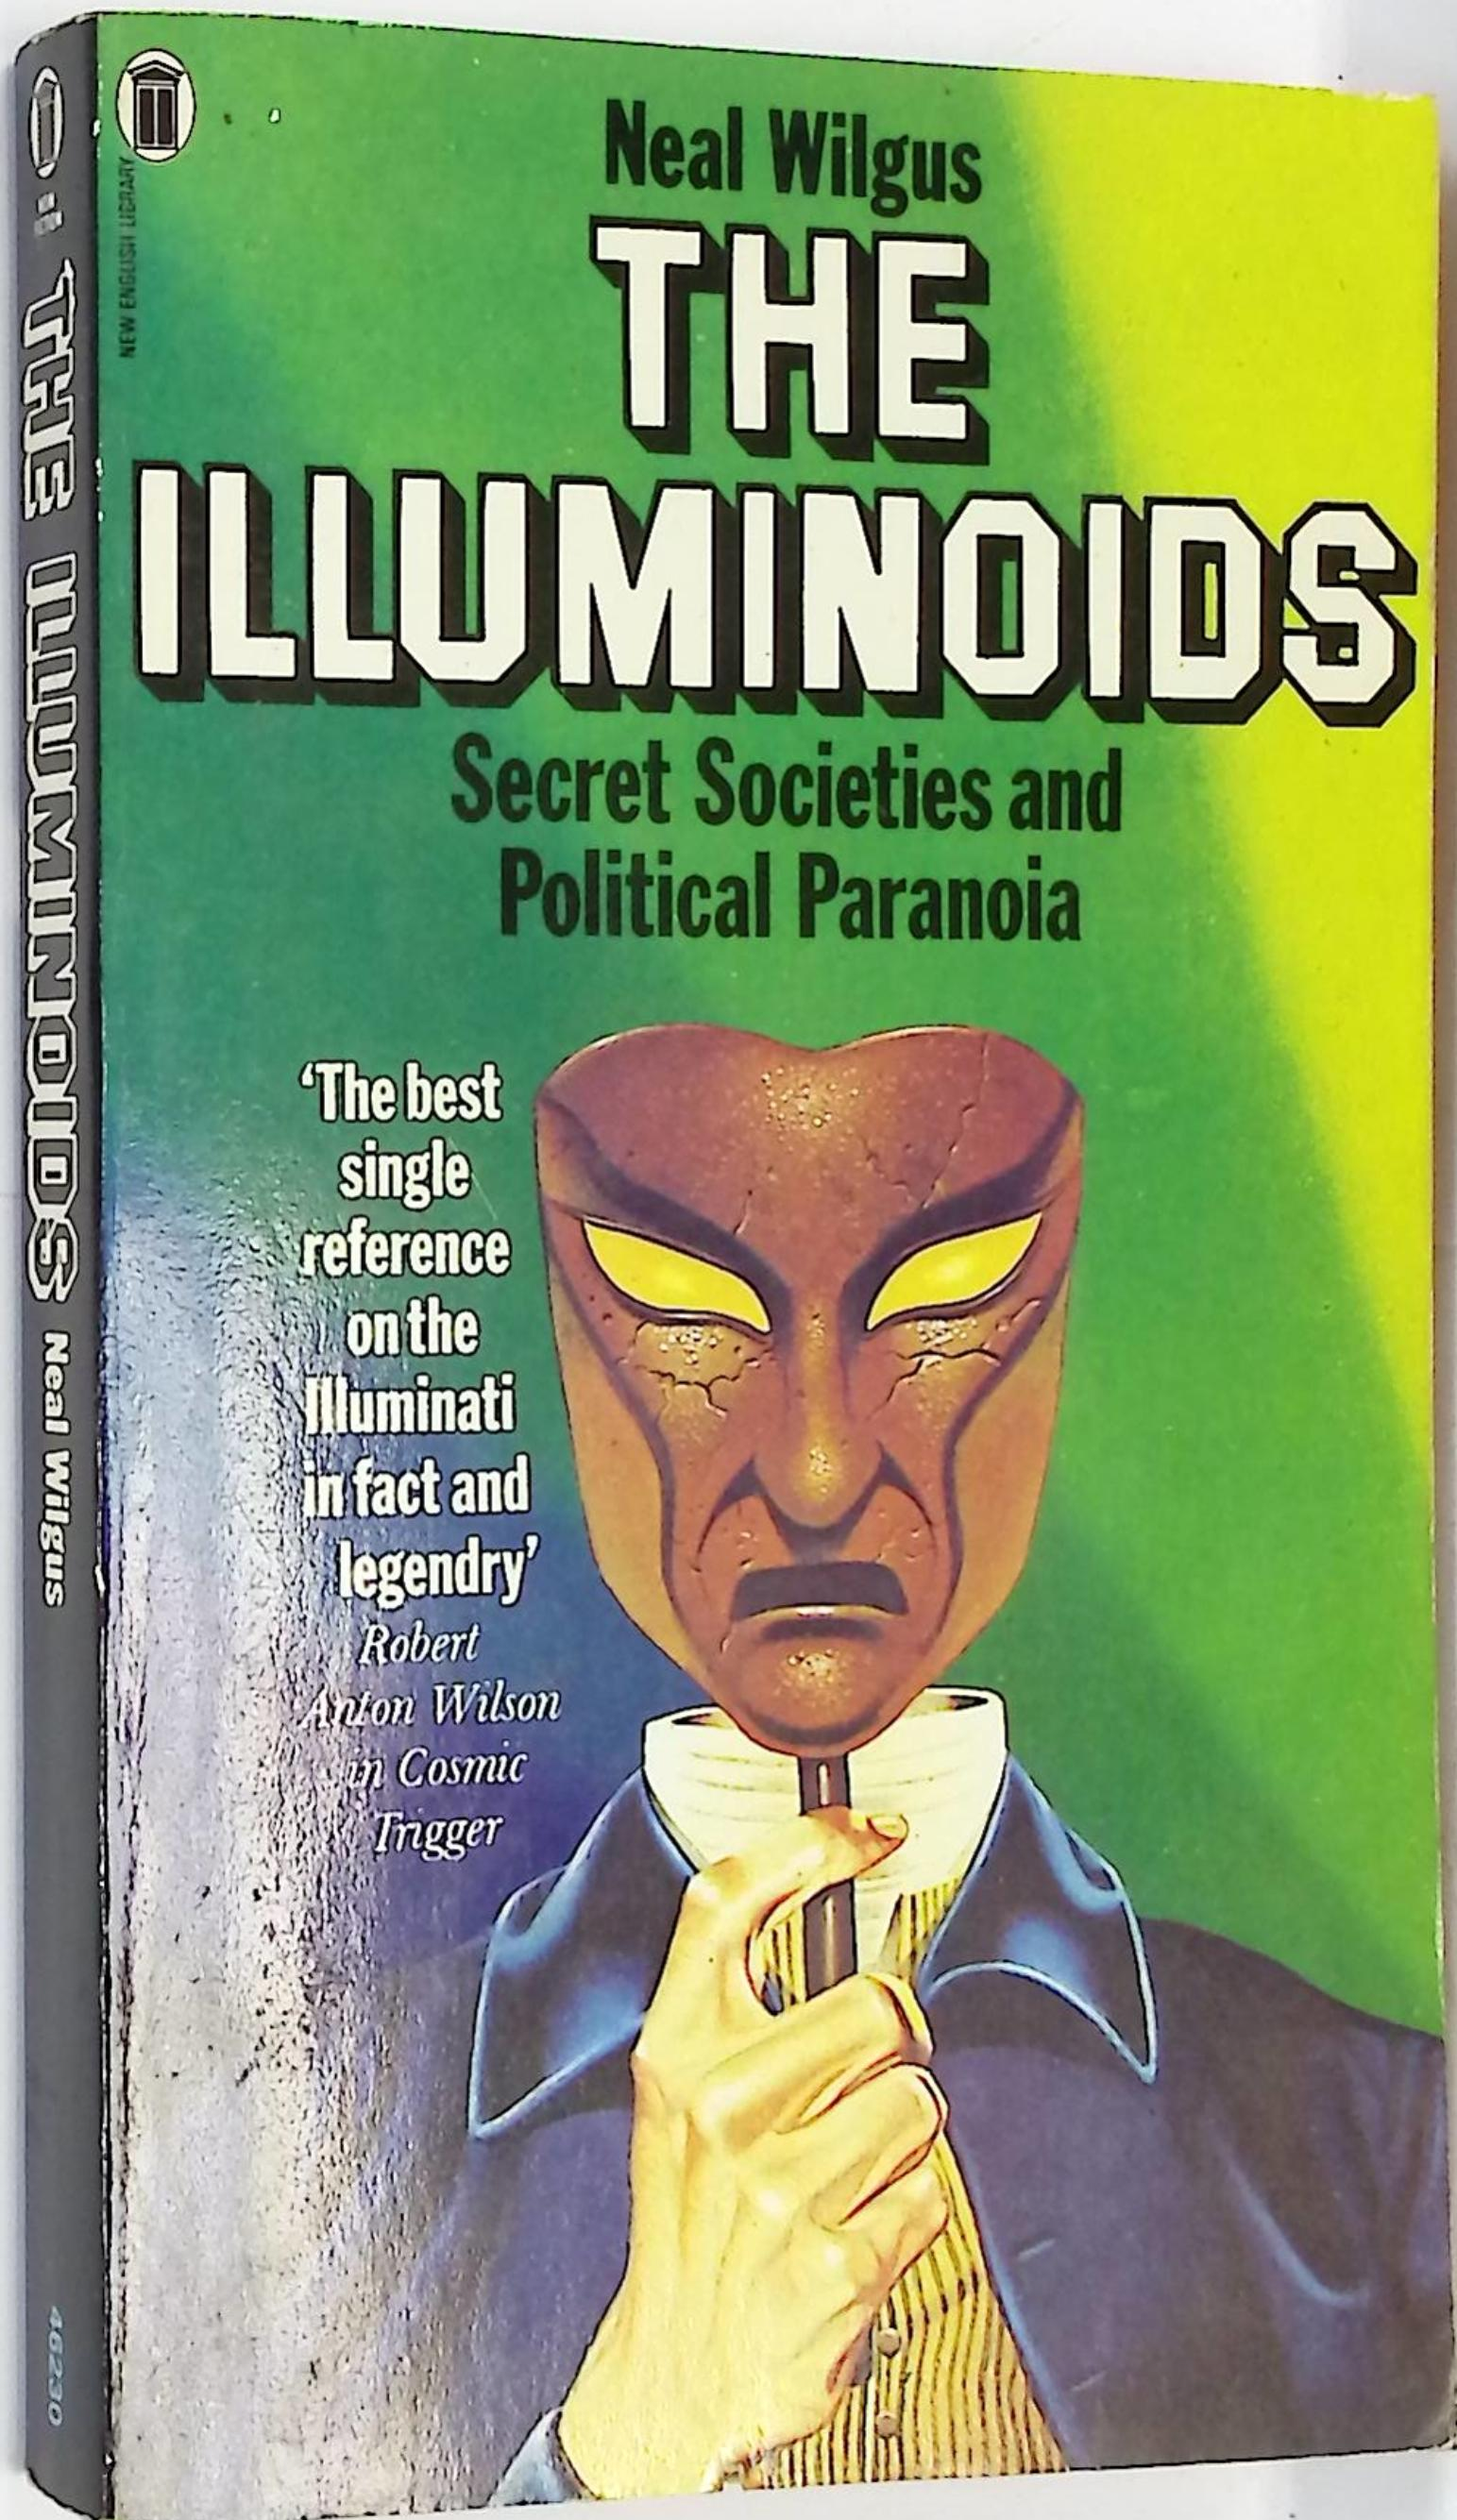 The Illuminoids. Secret Societies and Political Paranoia